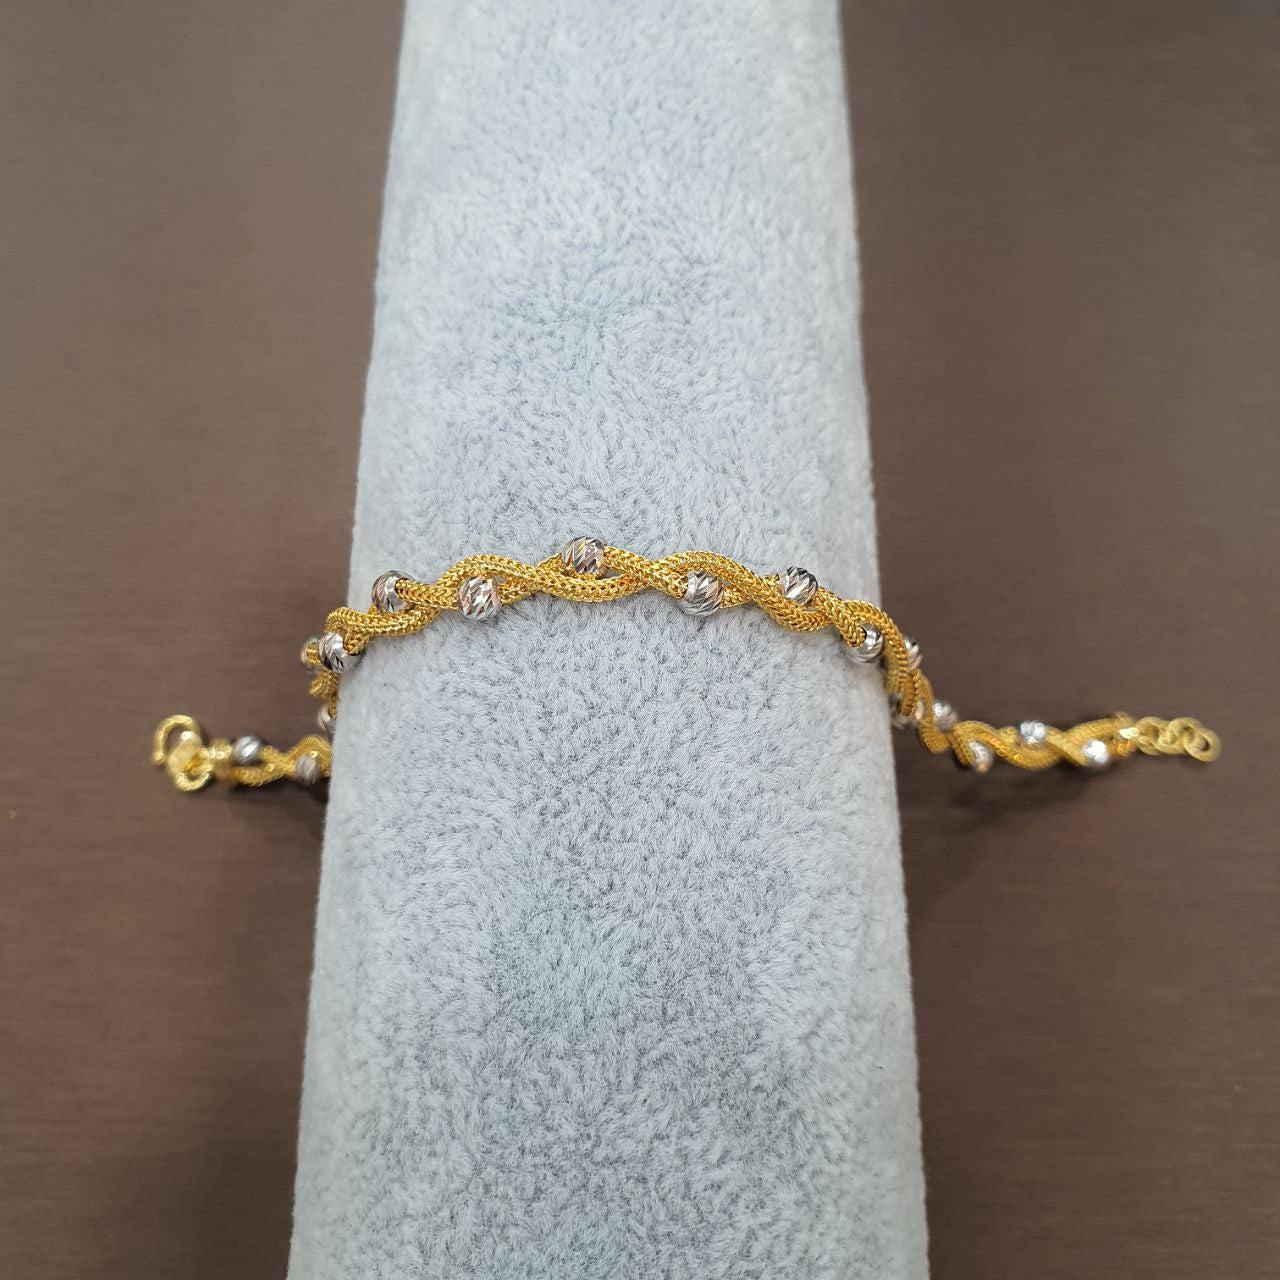 22k / 916 Spiral ball bracelet 2 tone-Bracelets-Best Gold Shop